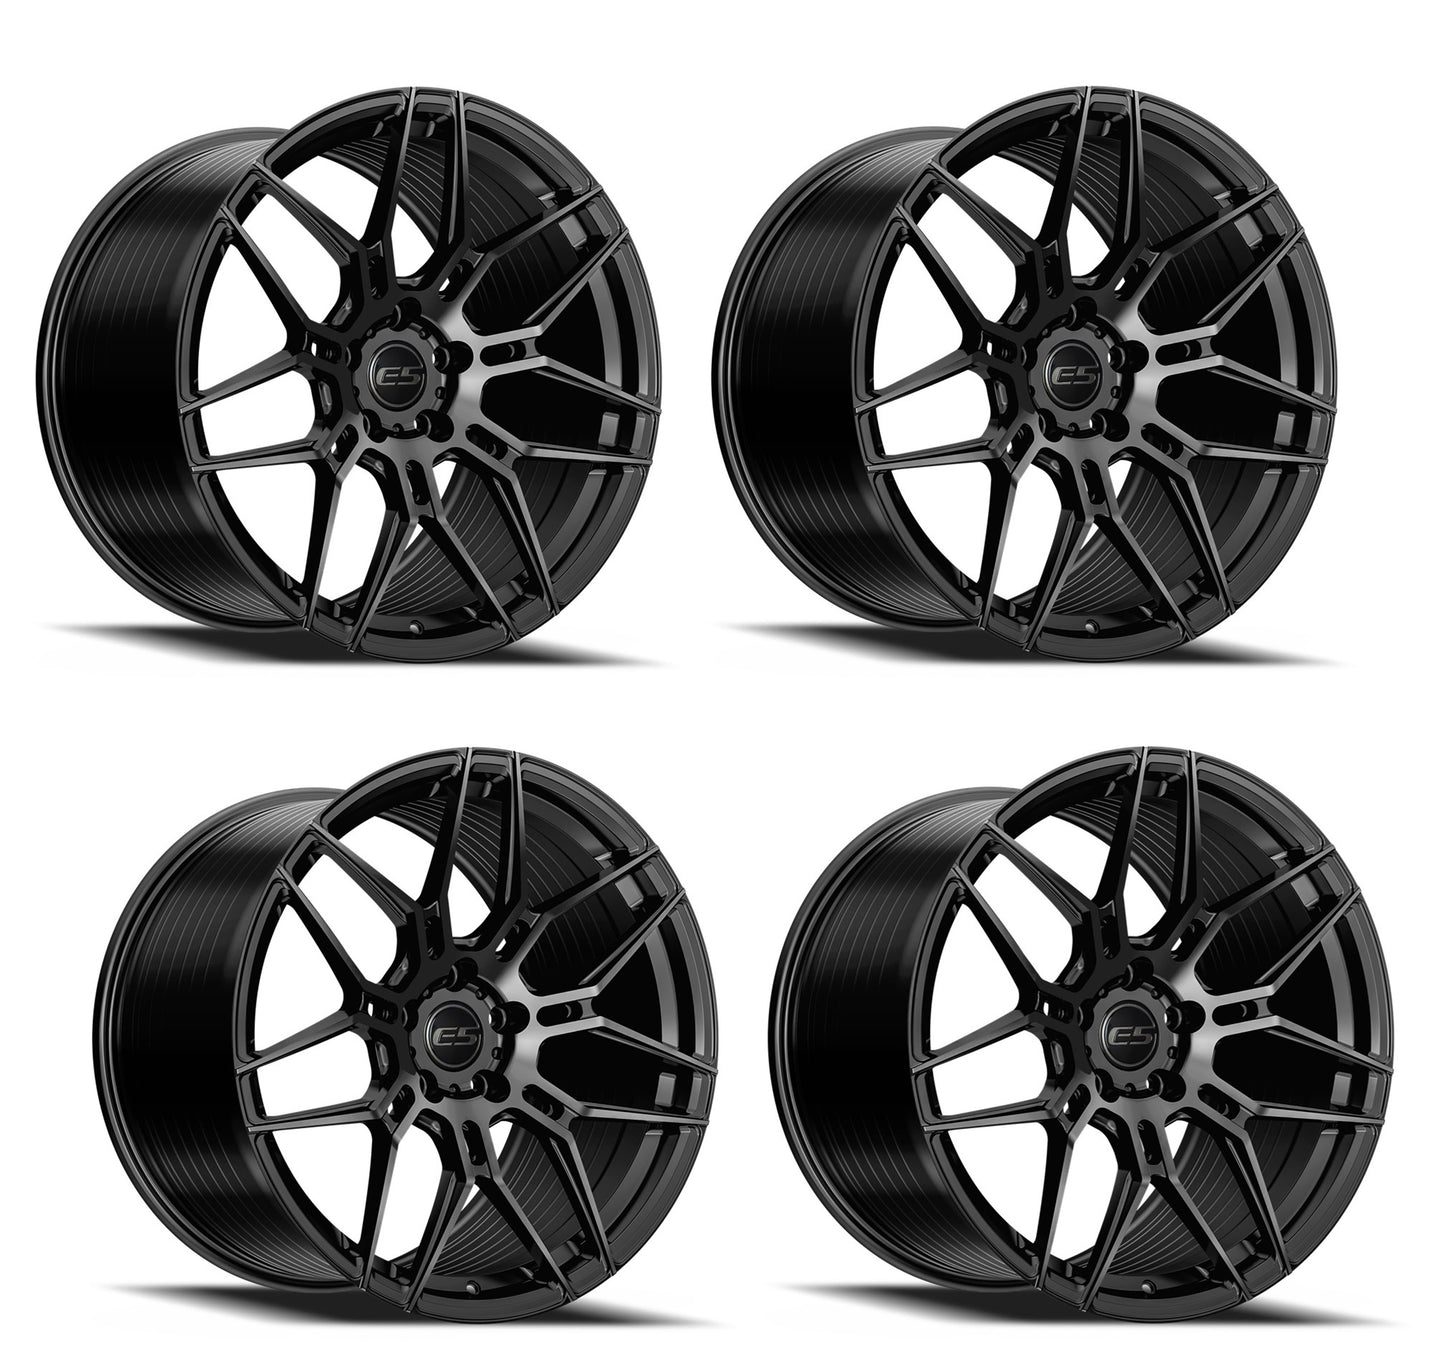 C8 Corvette E5 Speedway Wheels - Gloss Black (Set)